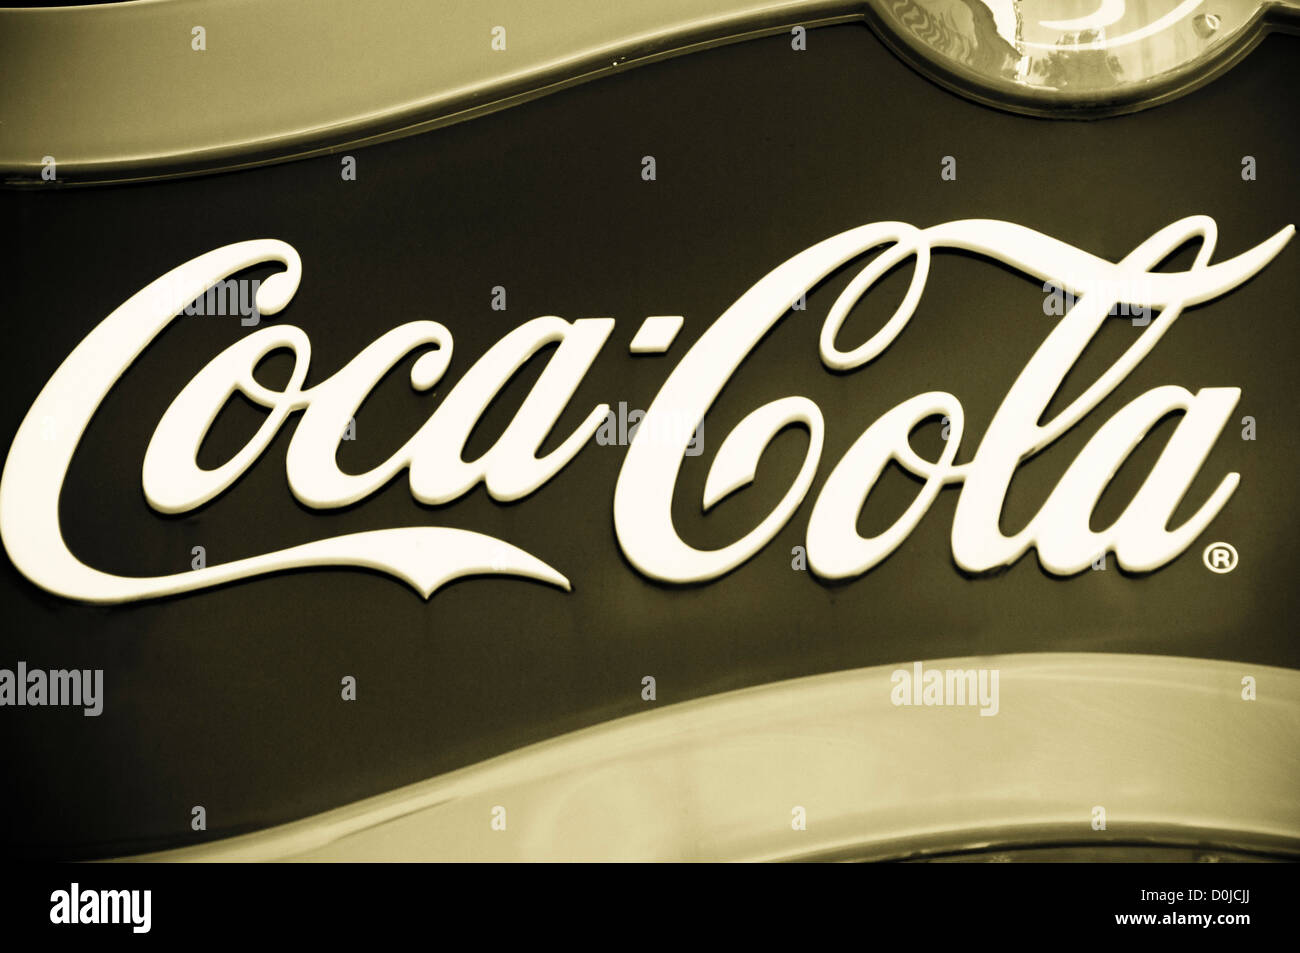 vintage Coca cola logo Stock Photo